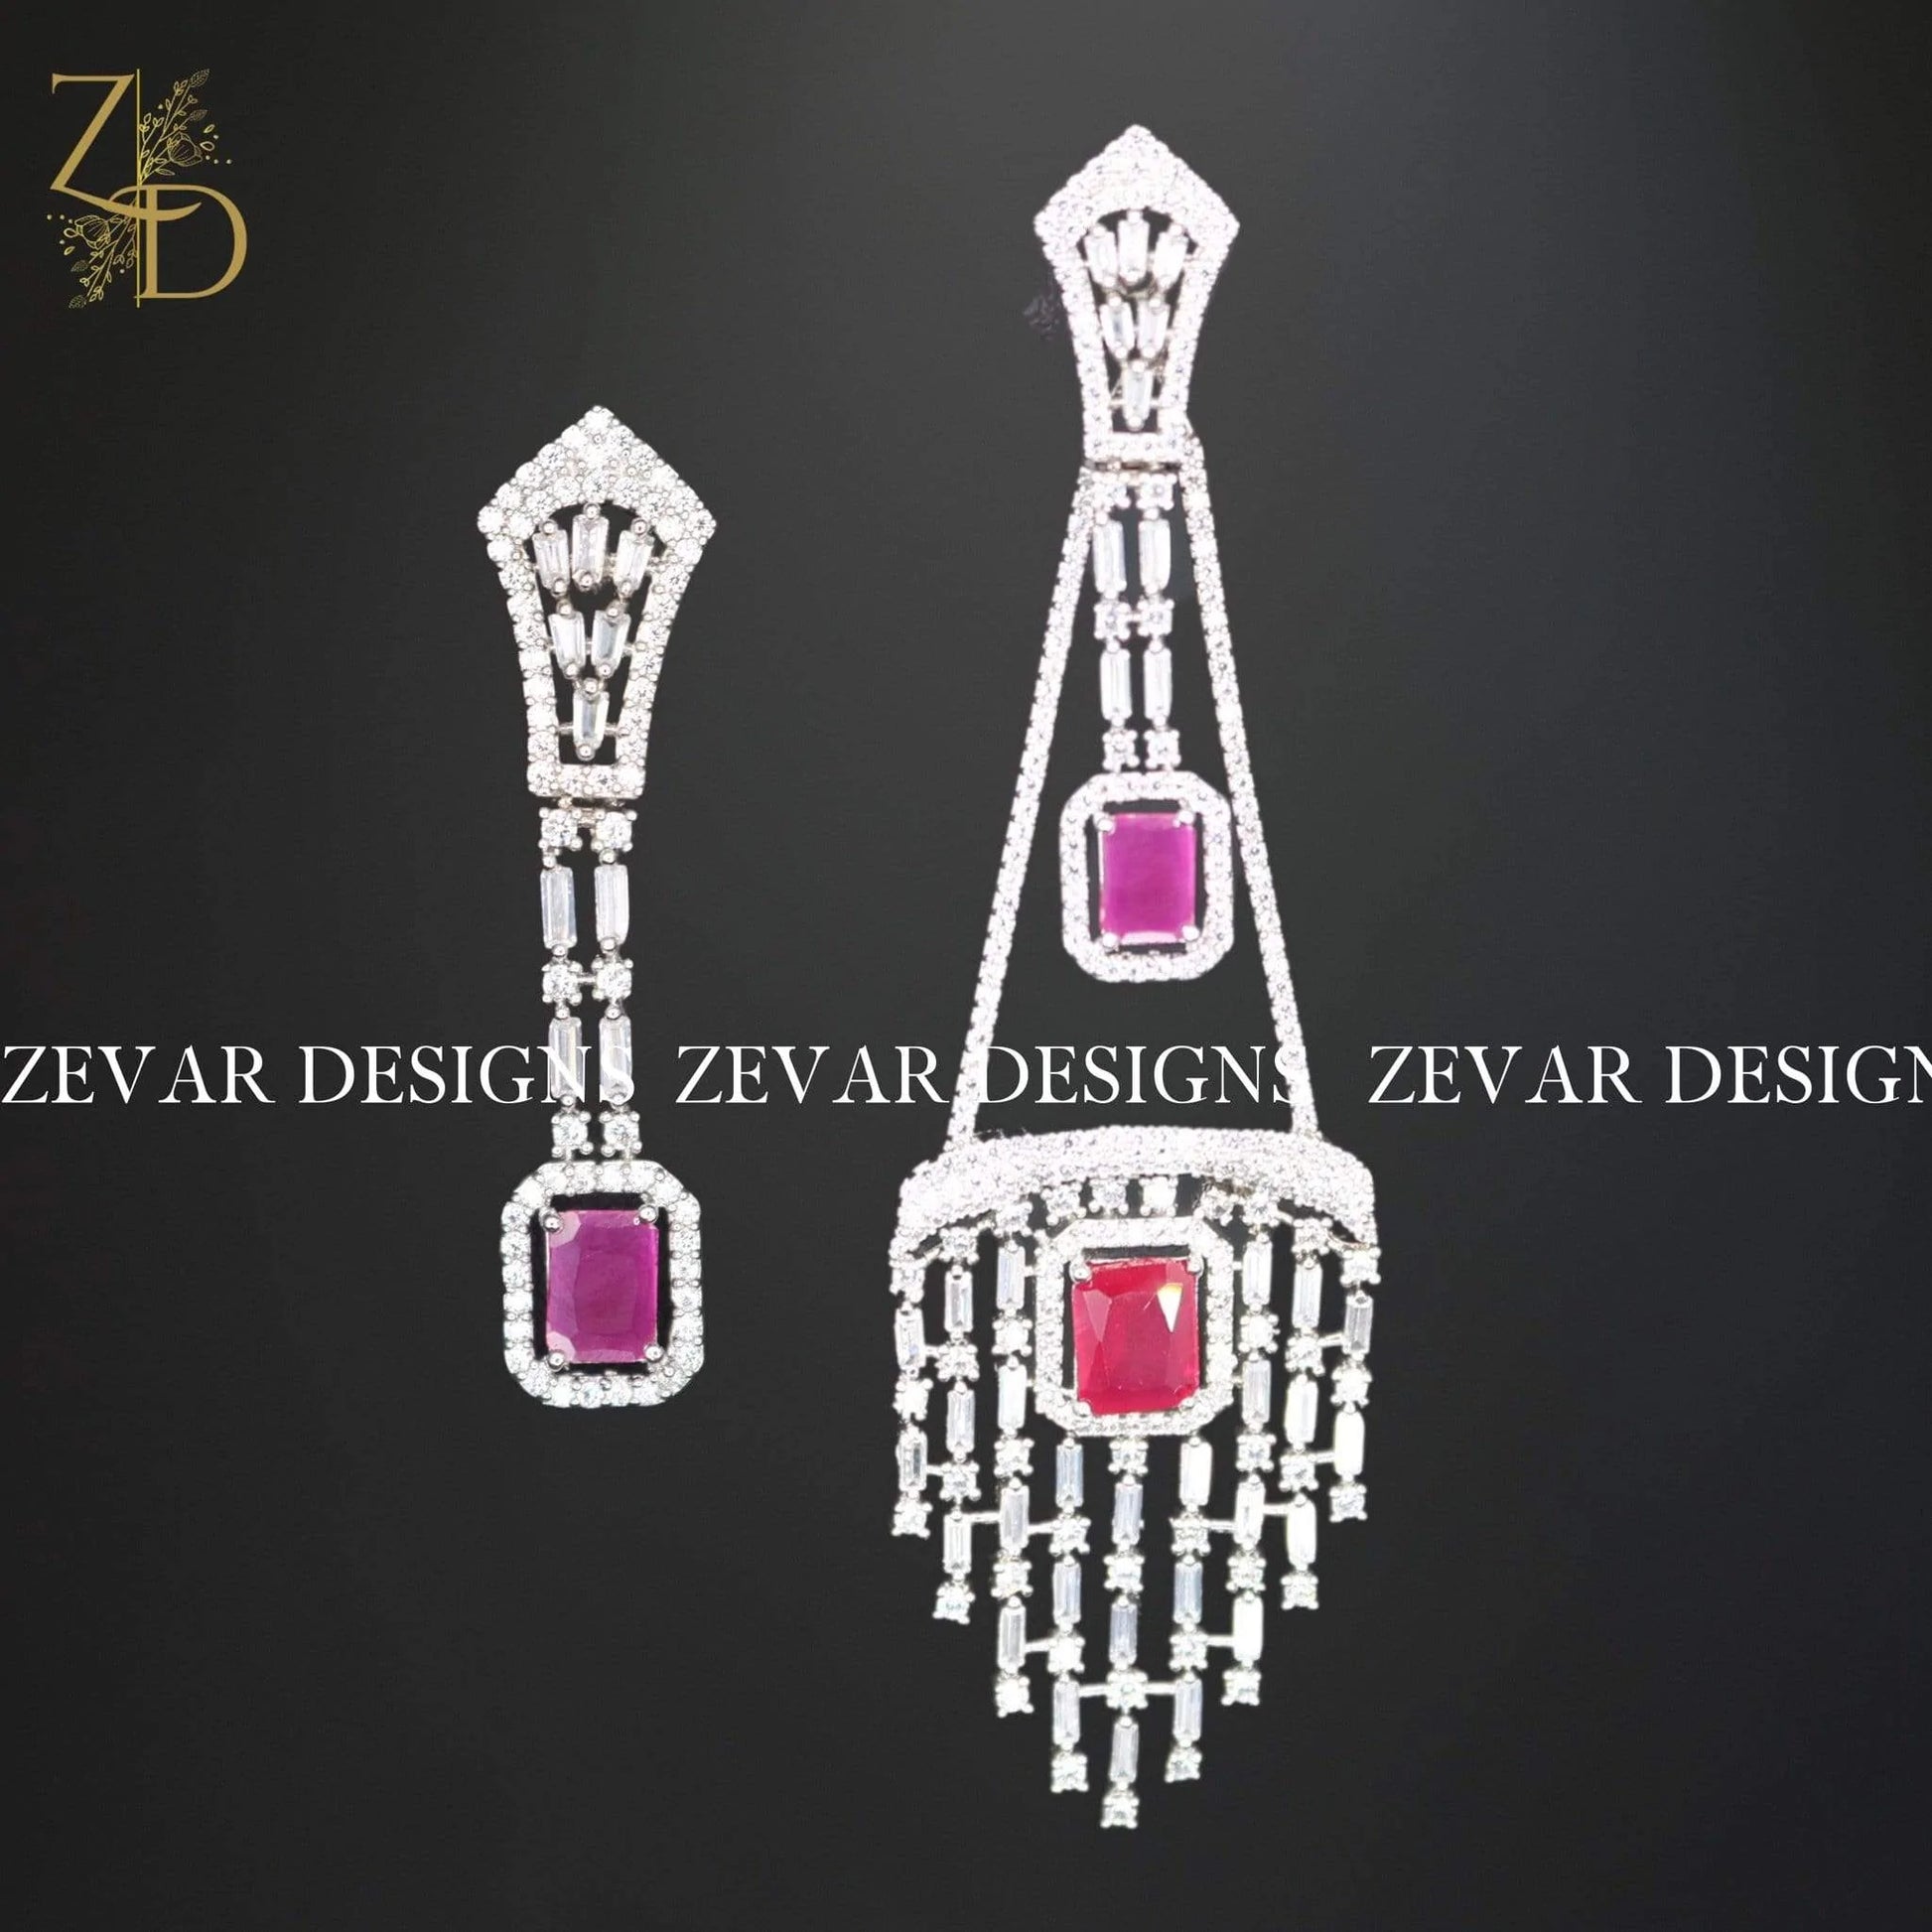 Zevar Designs Zircon Earrings Zirconia 2 in 1 Earrings in Ruby Red and White Rhodium